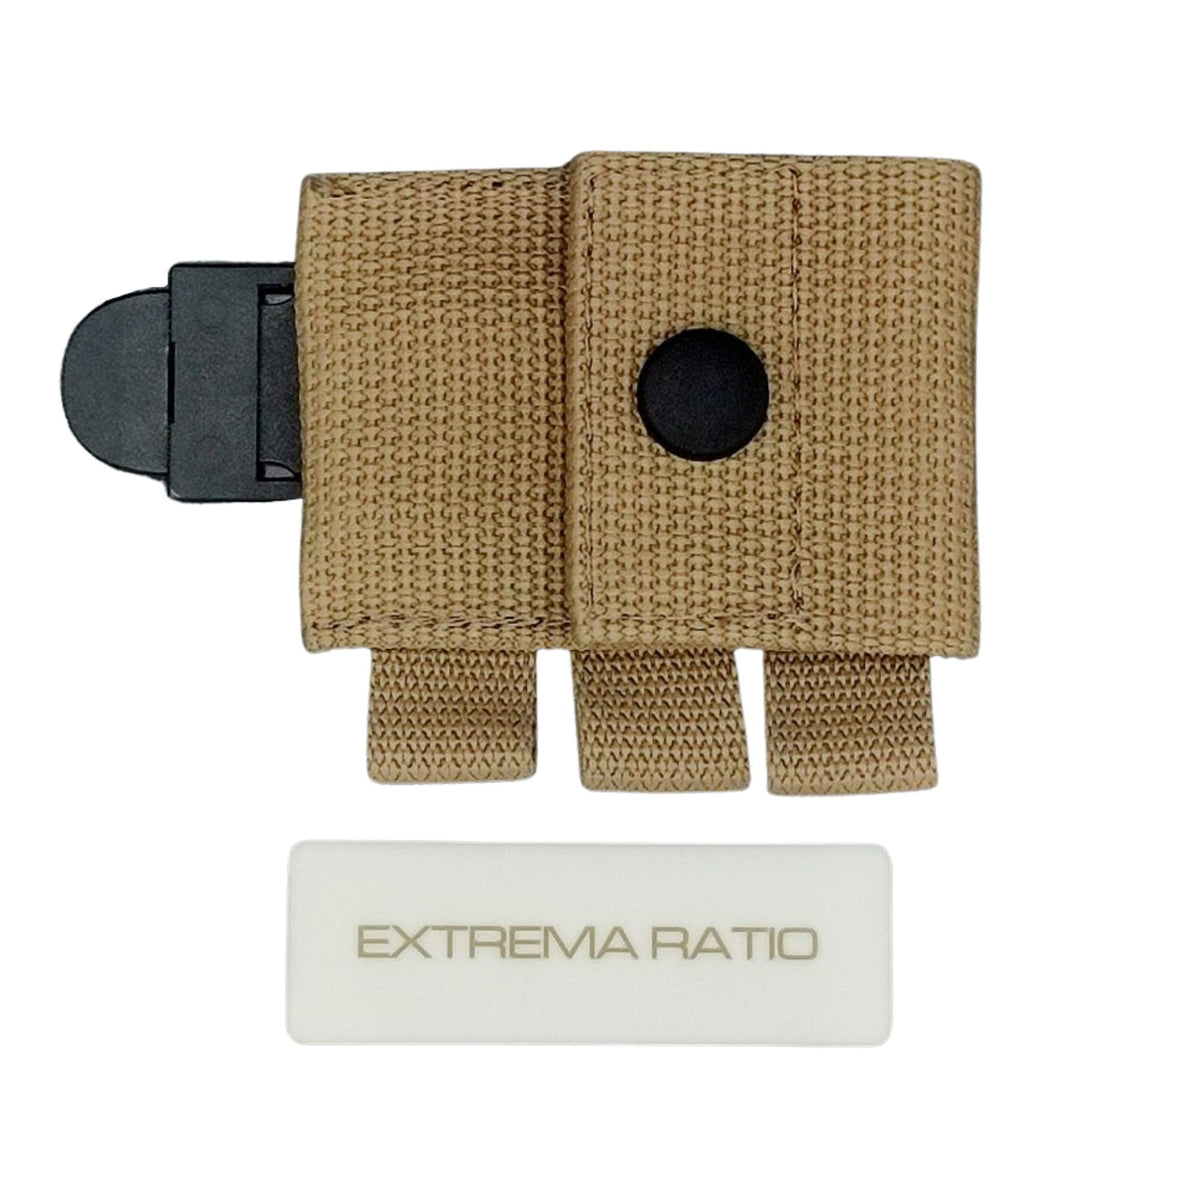 EXTREMA RATIO | AFFILATORE DOPPIA GRANA - Kit con tasca